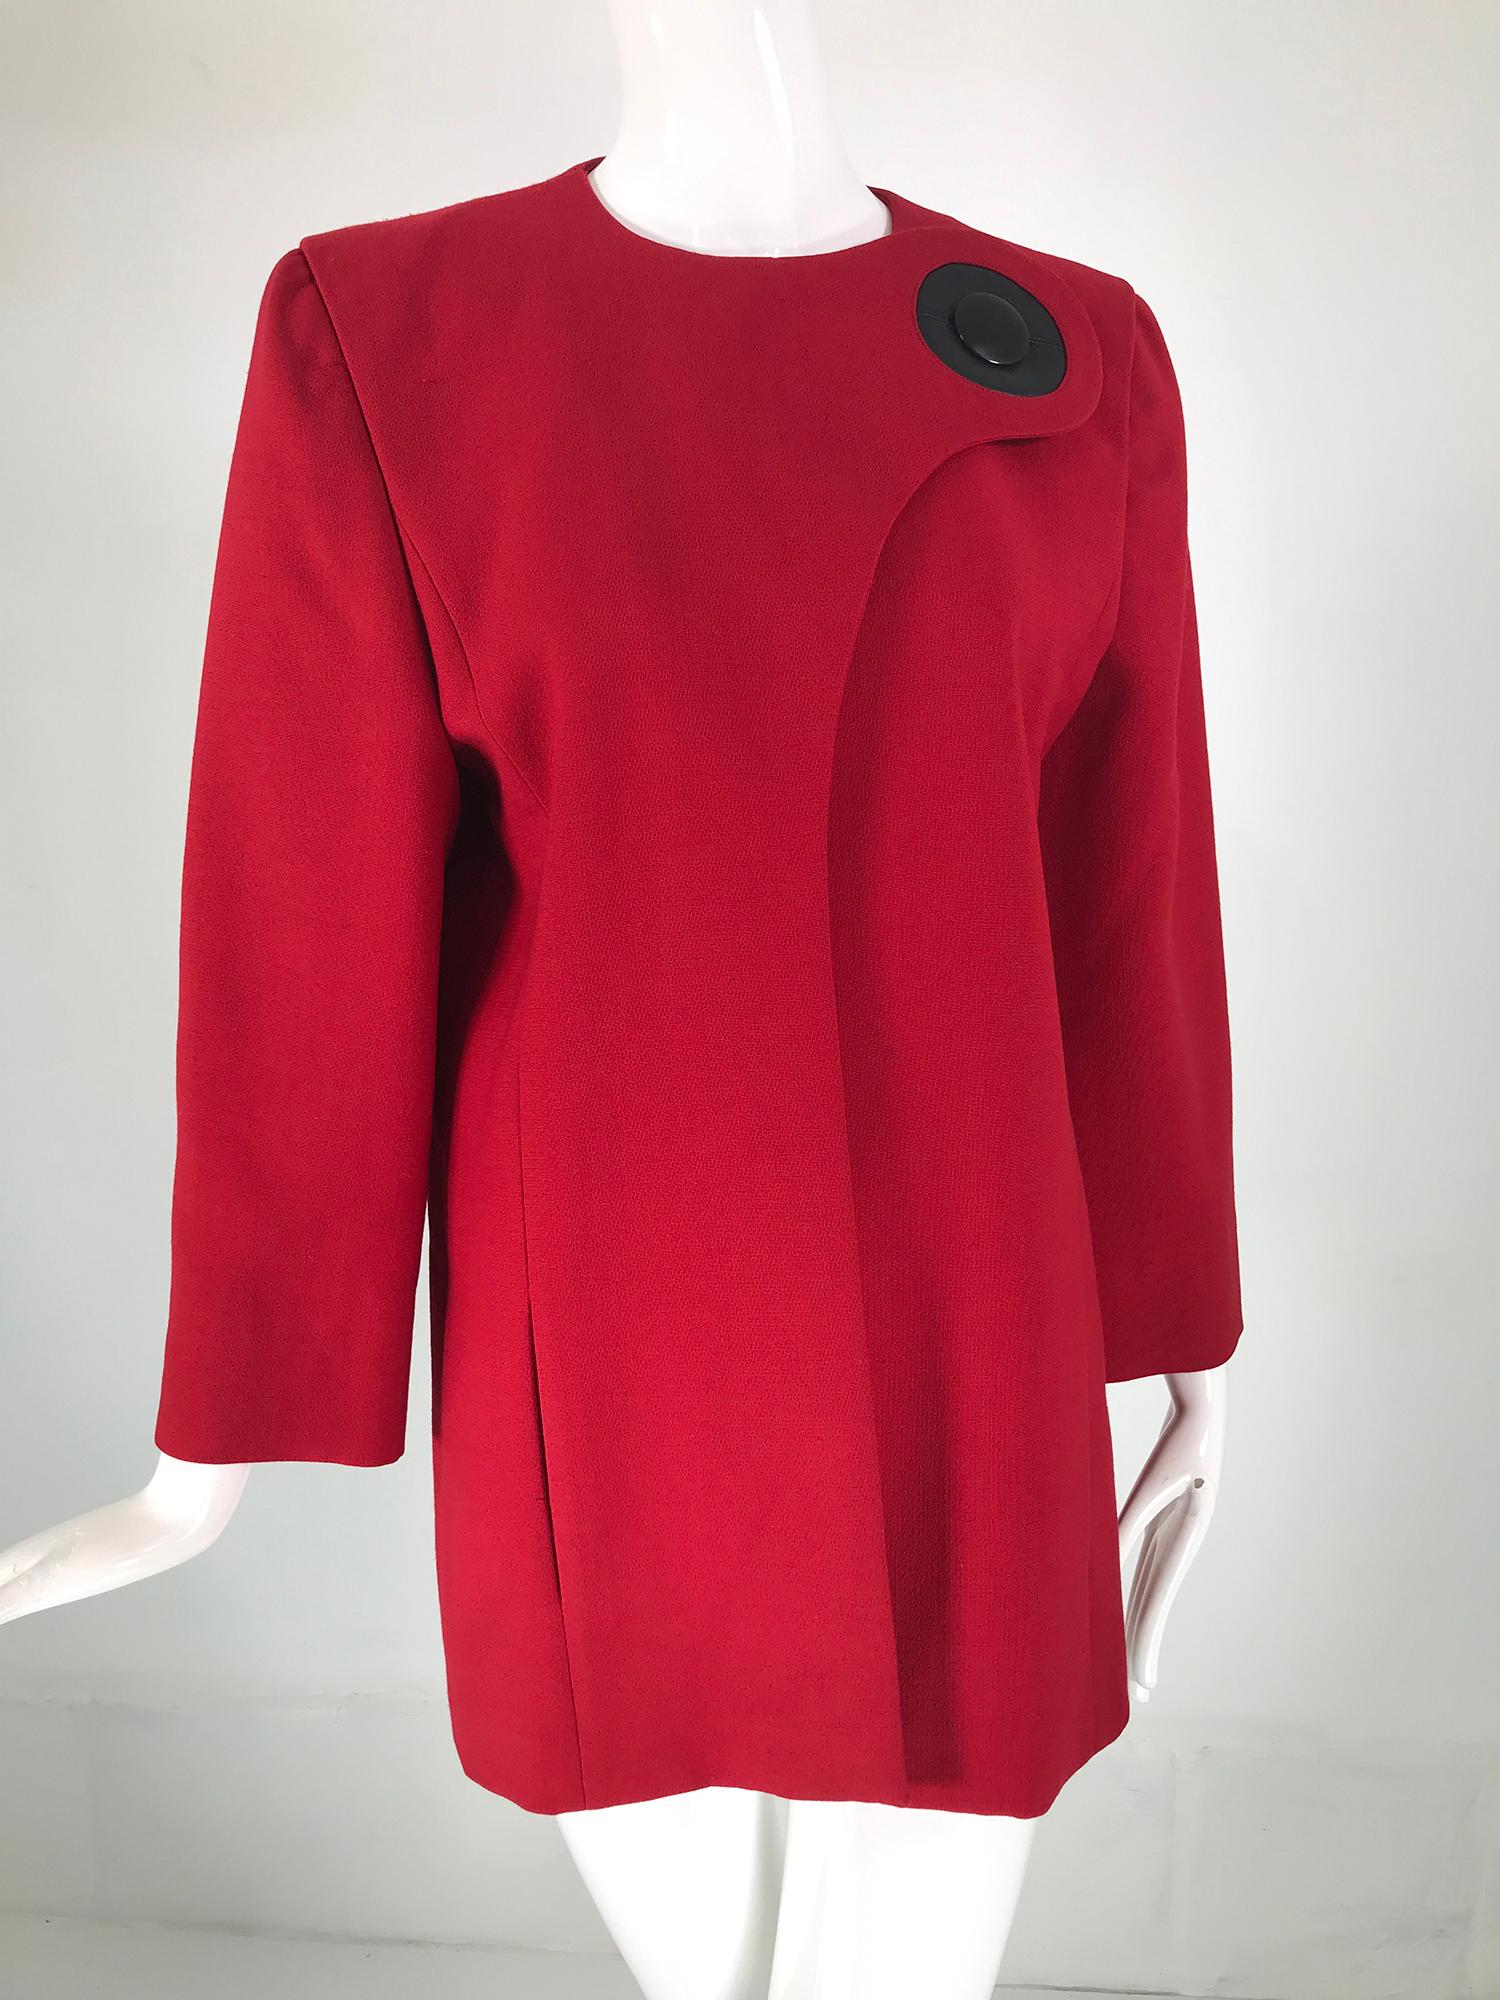 Boutique Pierre Cardin Paris Red Wool Space Age Jacket 1960s Rare Label 3